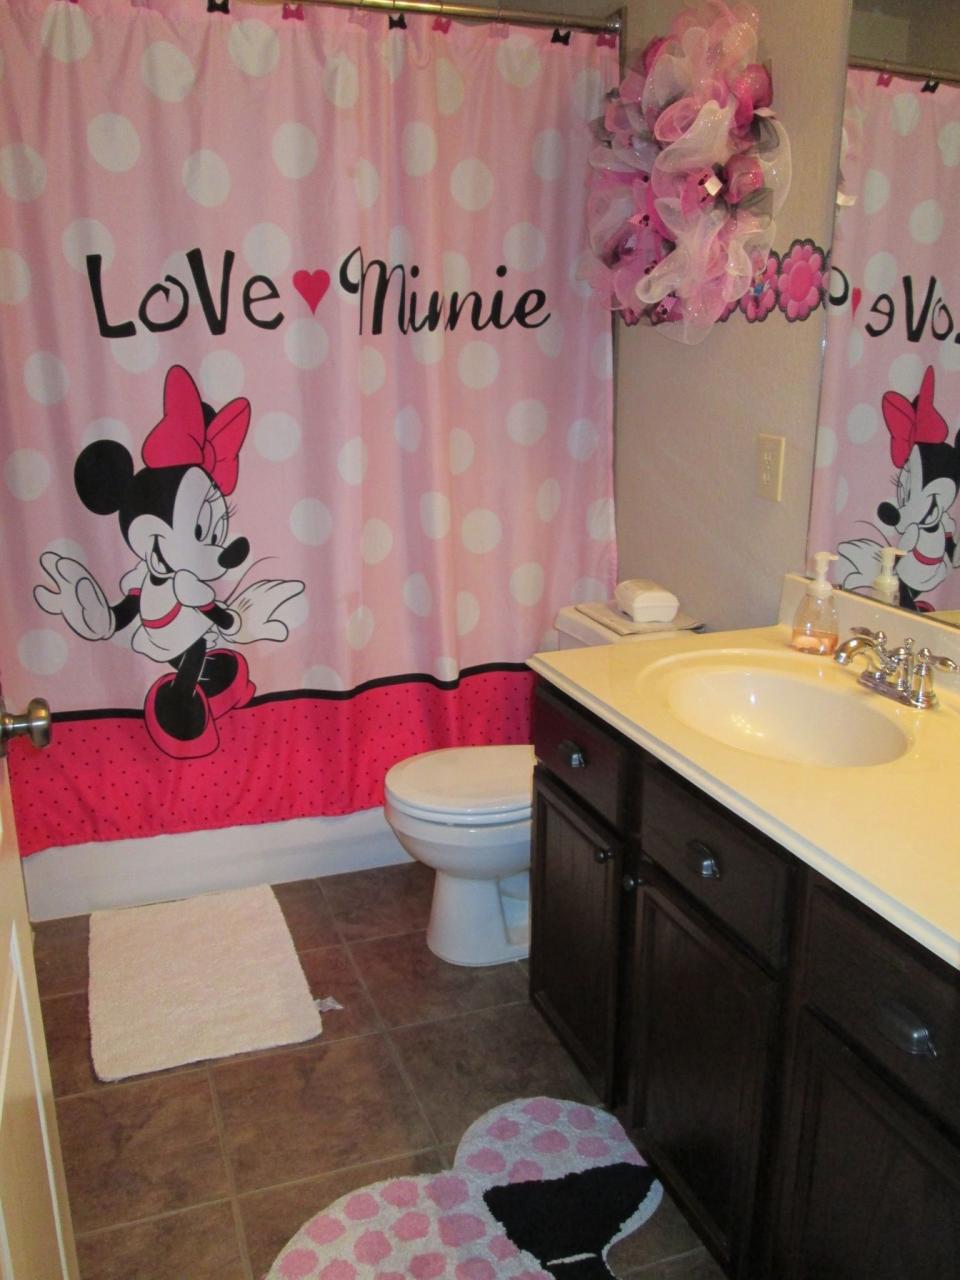 30 Bathroom Sets Design Ideas with Images Minnie mouse bathroom decor